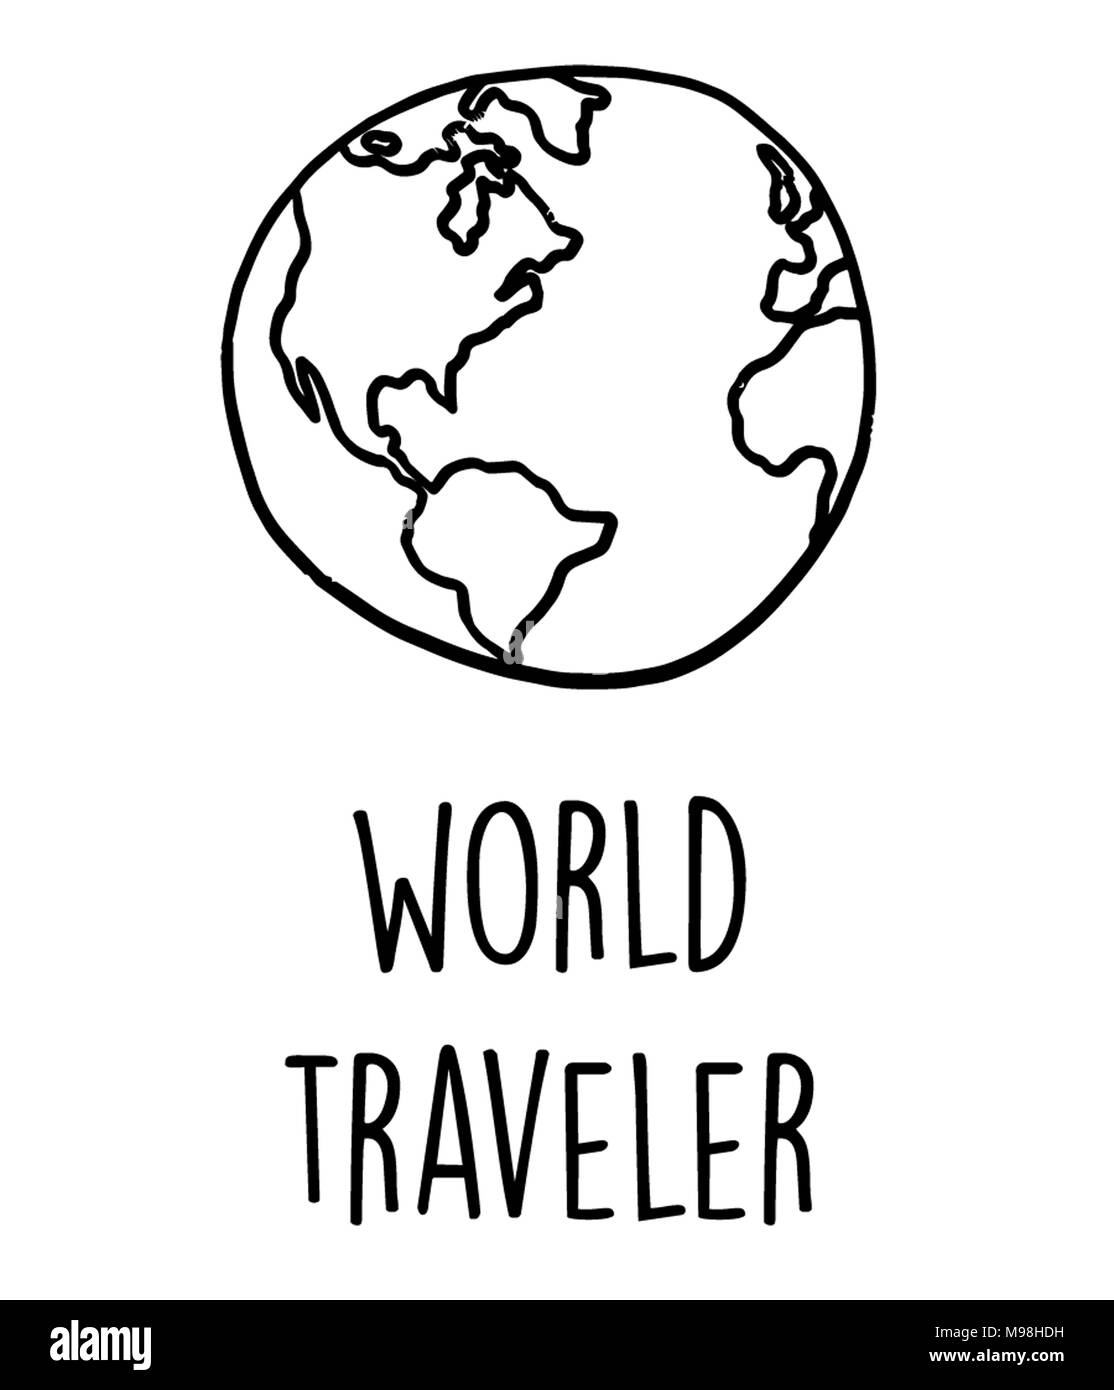 World traveler Black and White Stock Photos & Images - Alamy